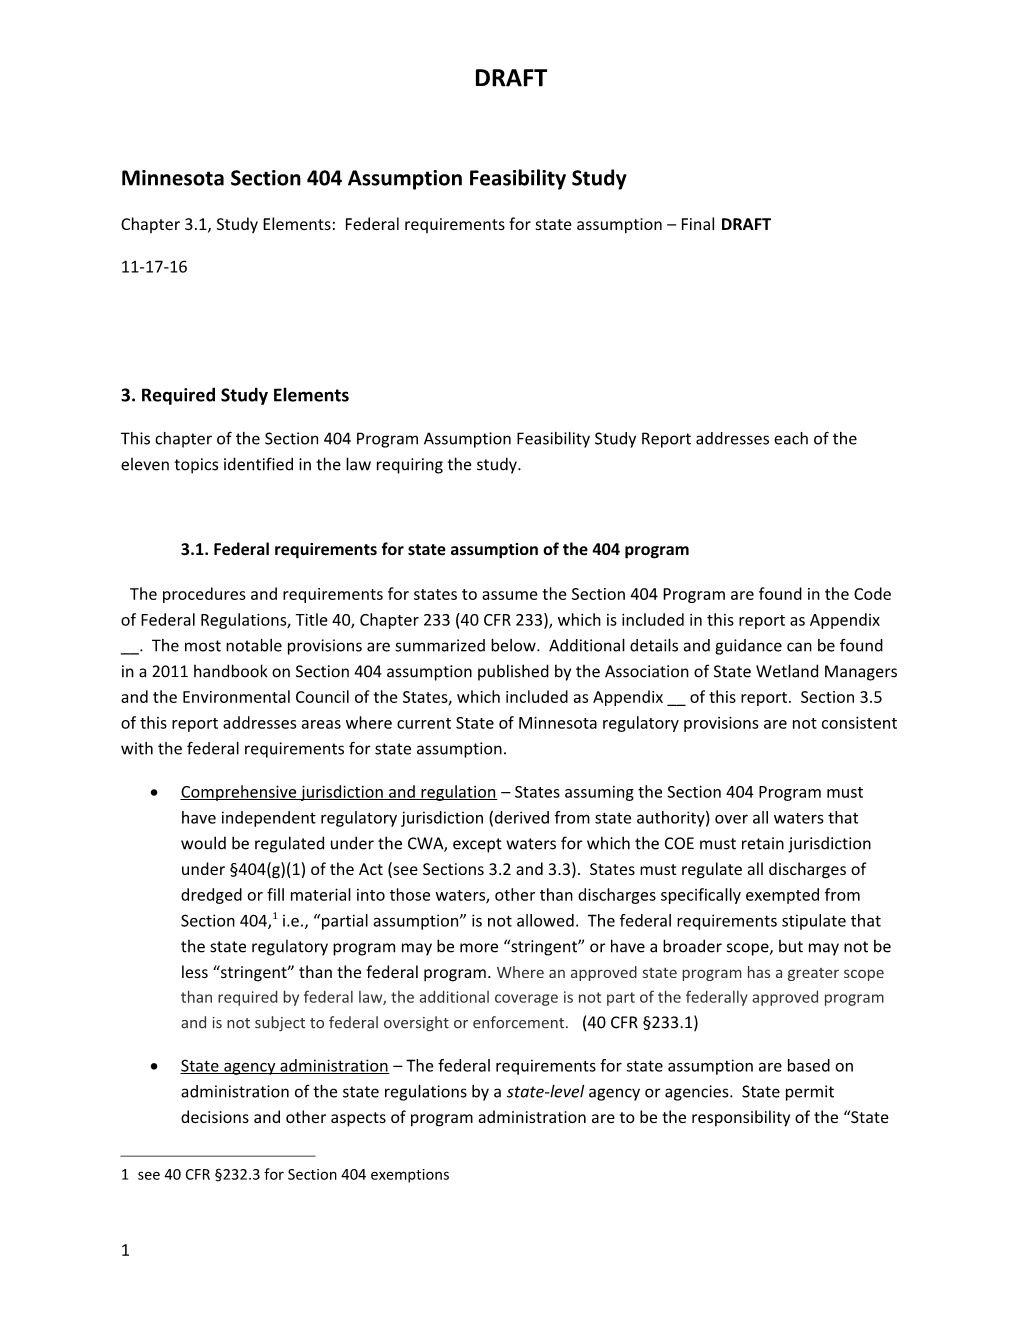 Minnesota Section 404 Assumption Feasibility Study